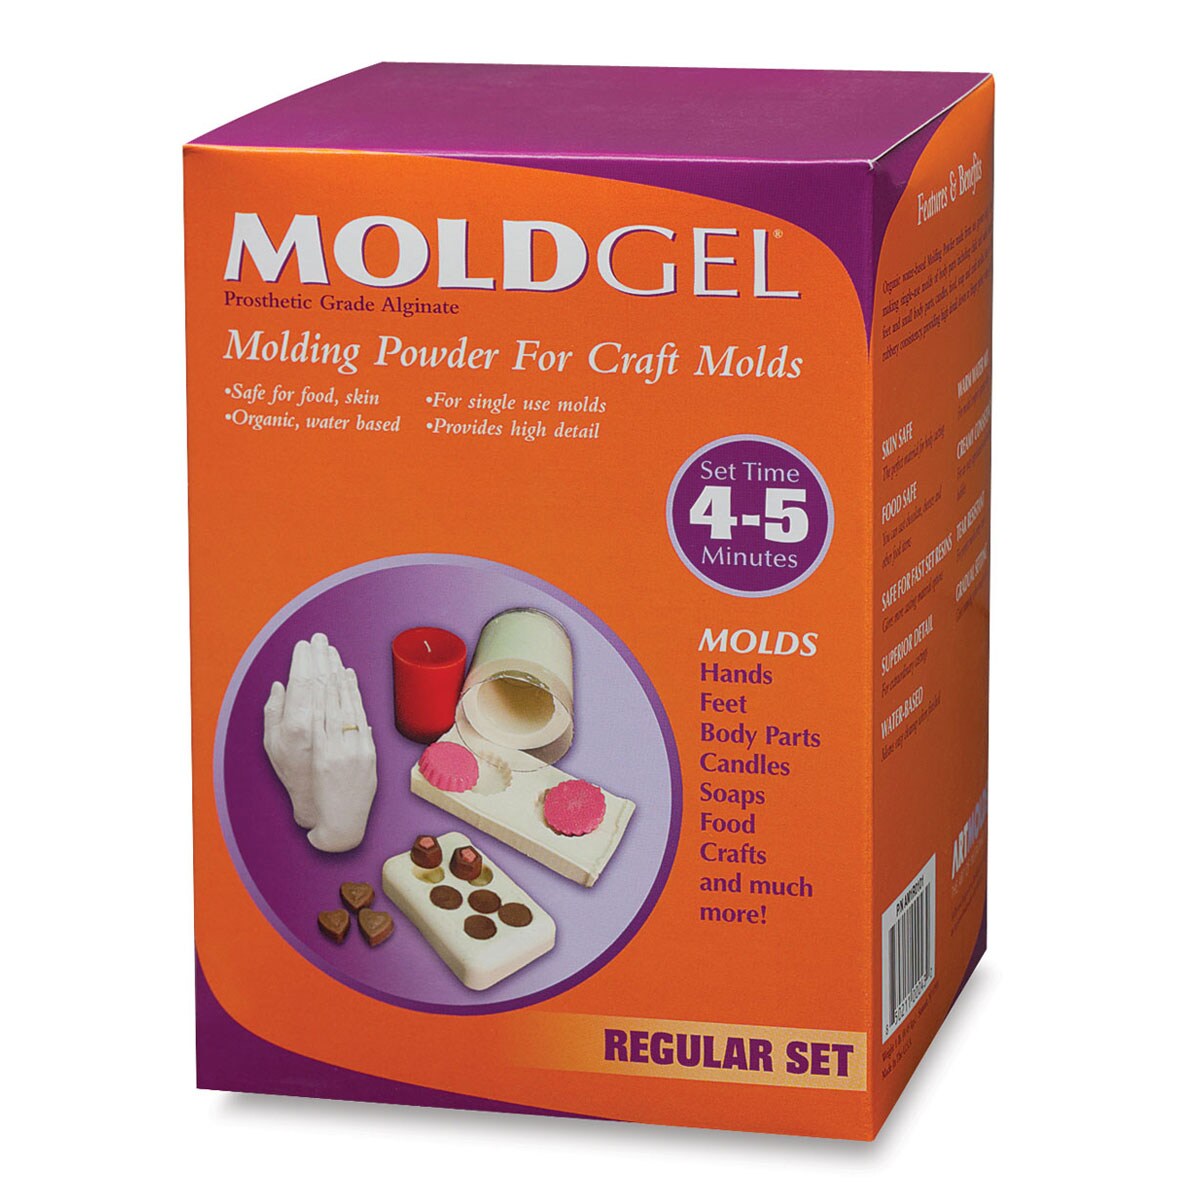 ArtMolds MoldGel Regular Set - 1 lb